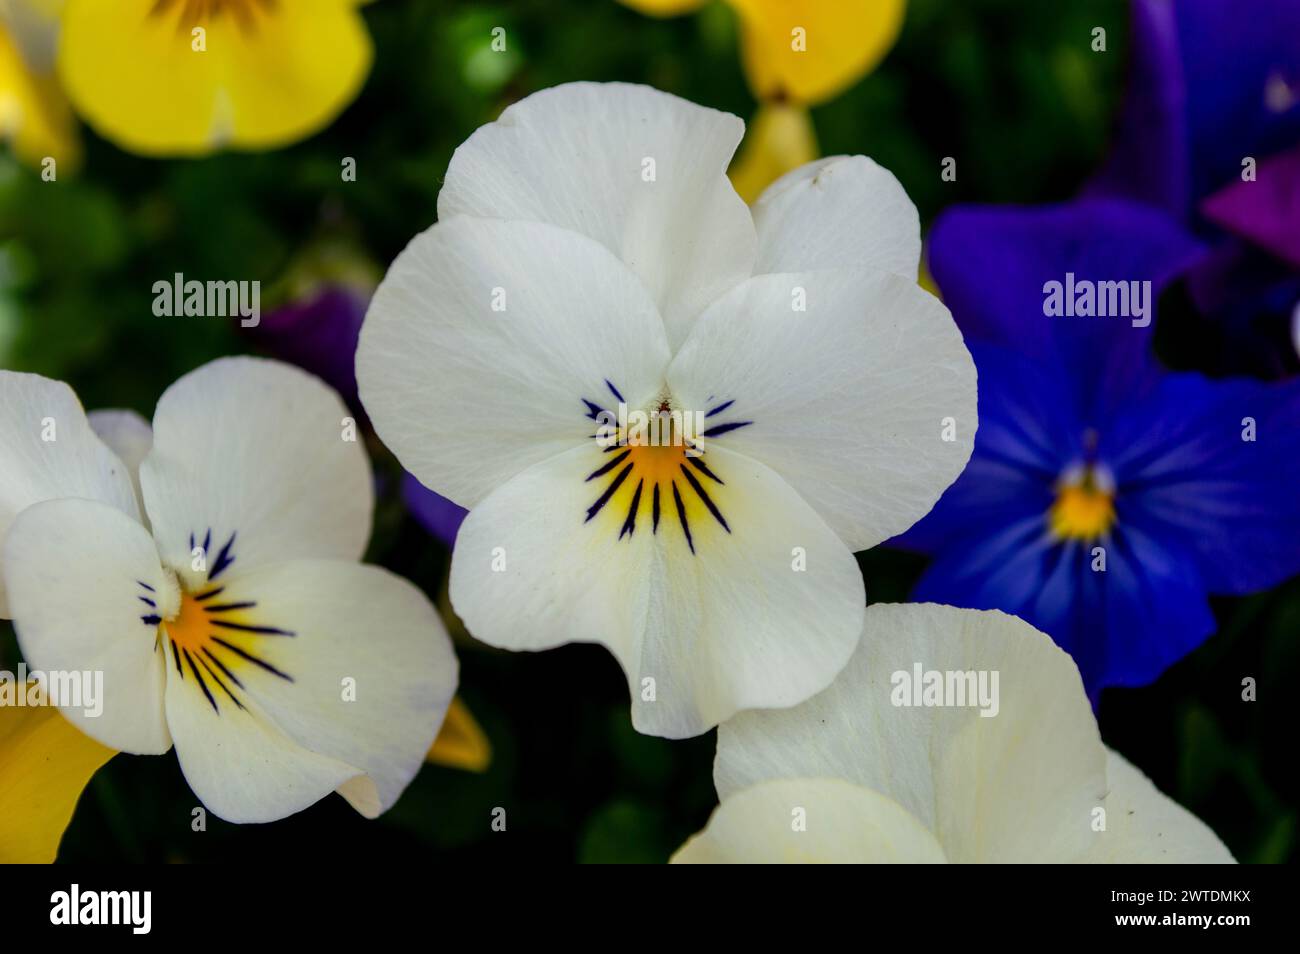 Garden flowers, pansies Stock Photo